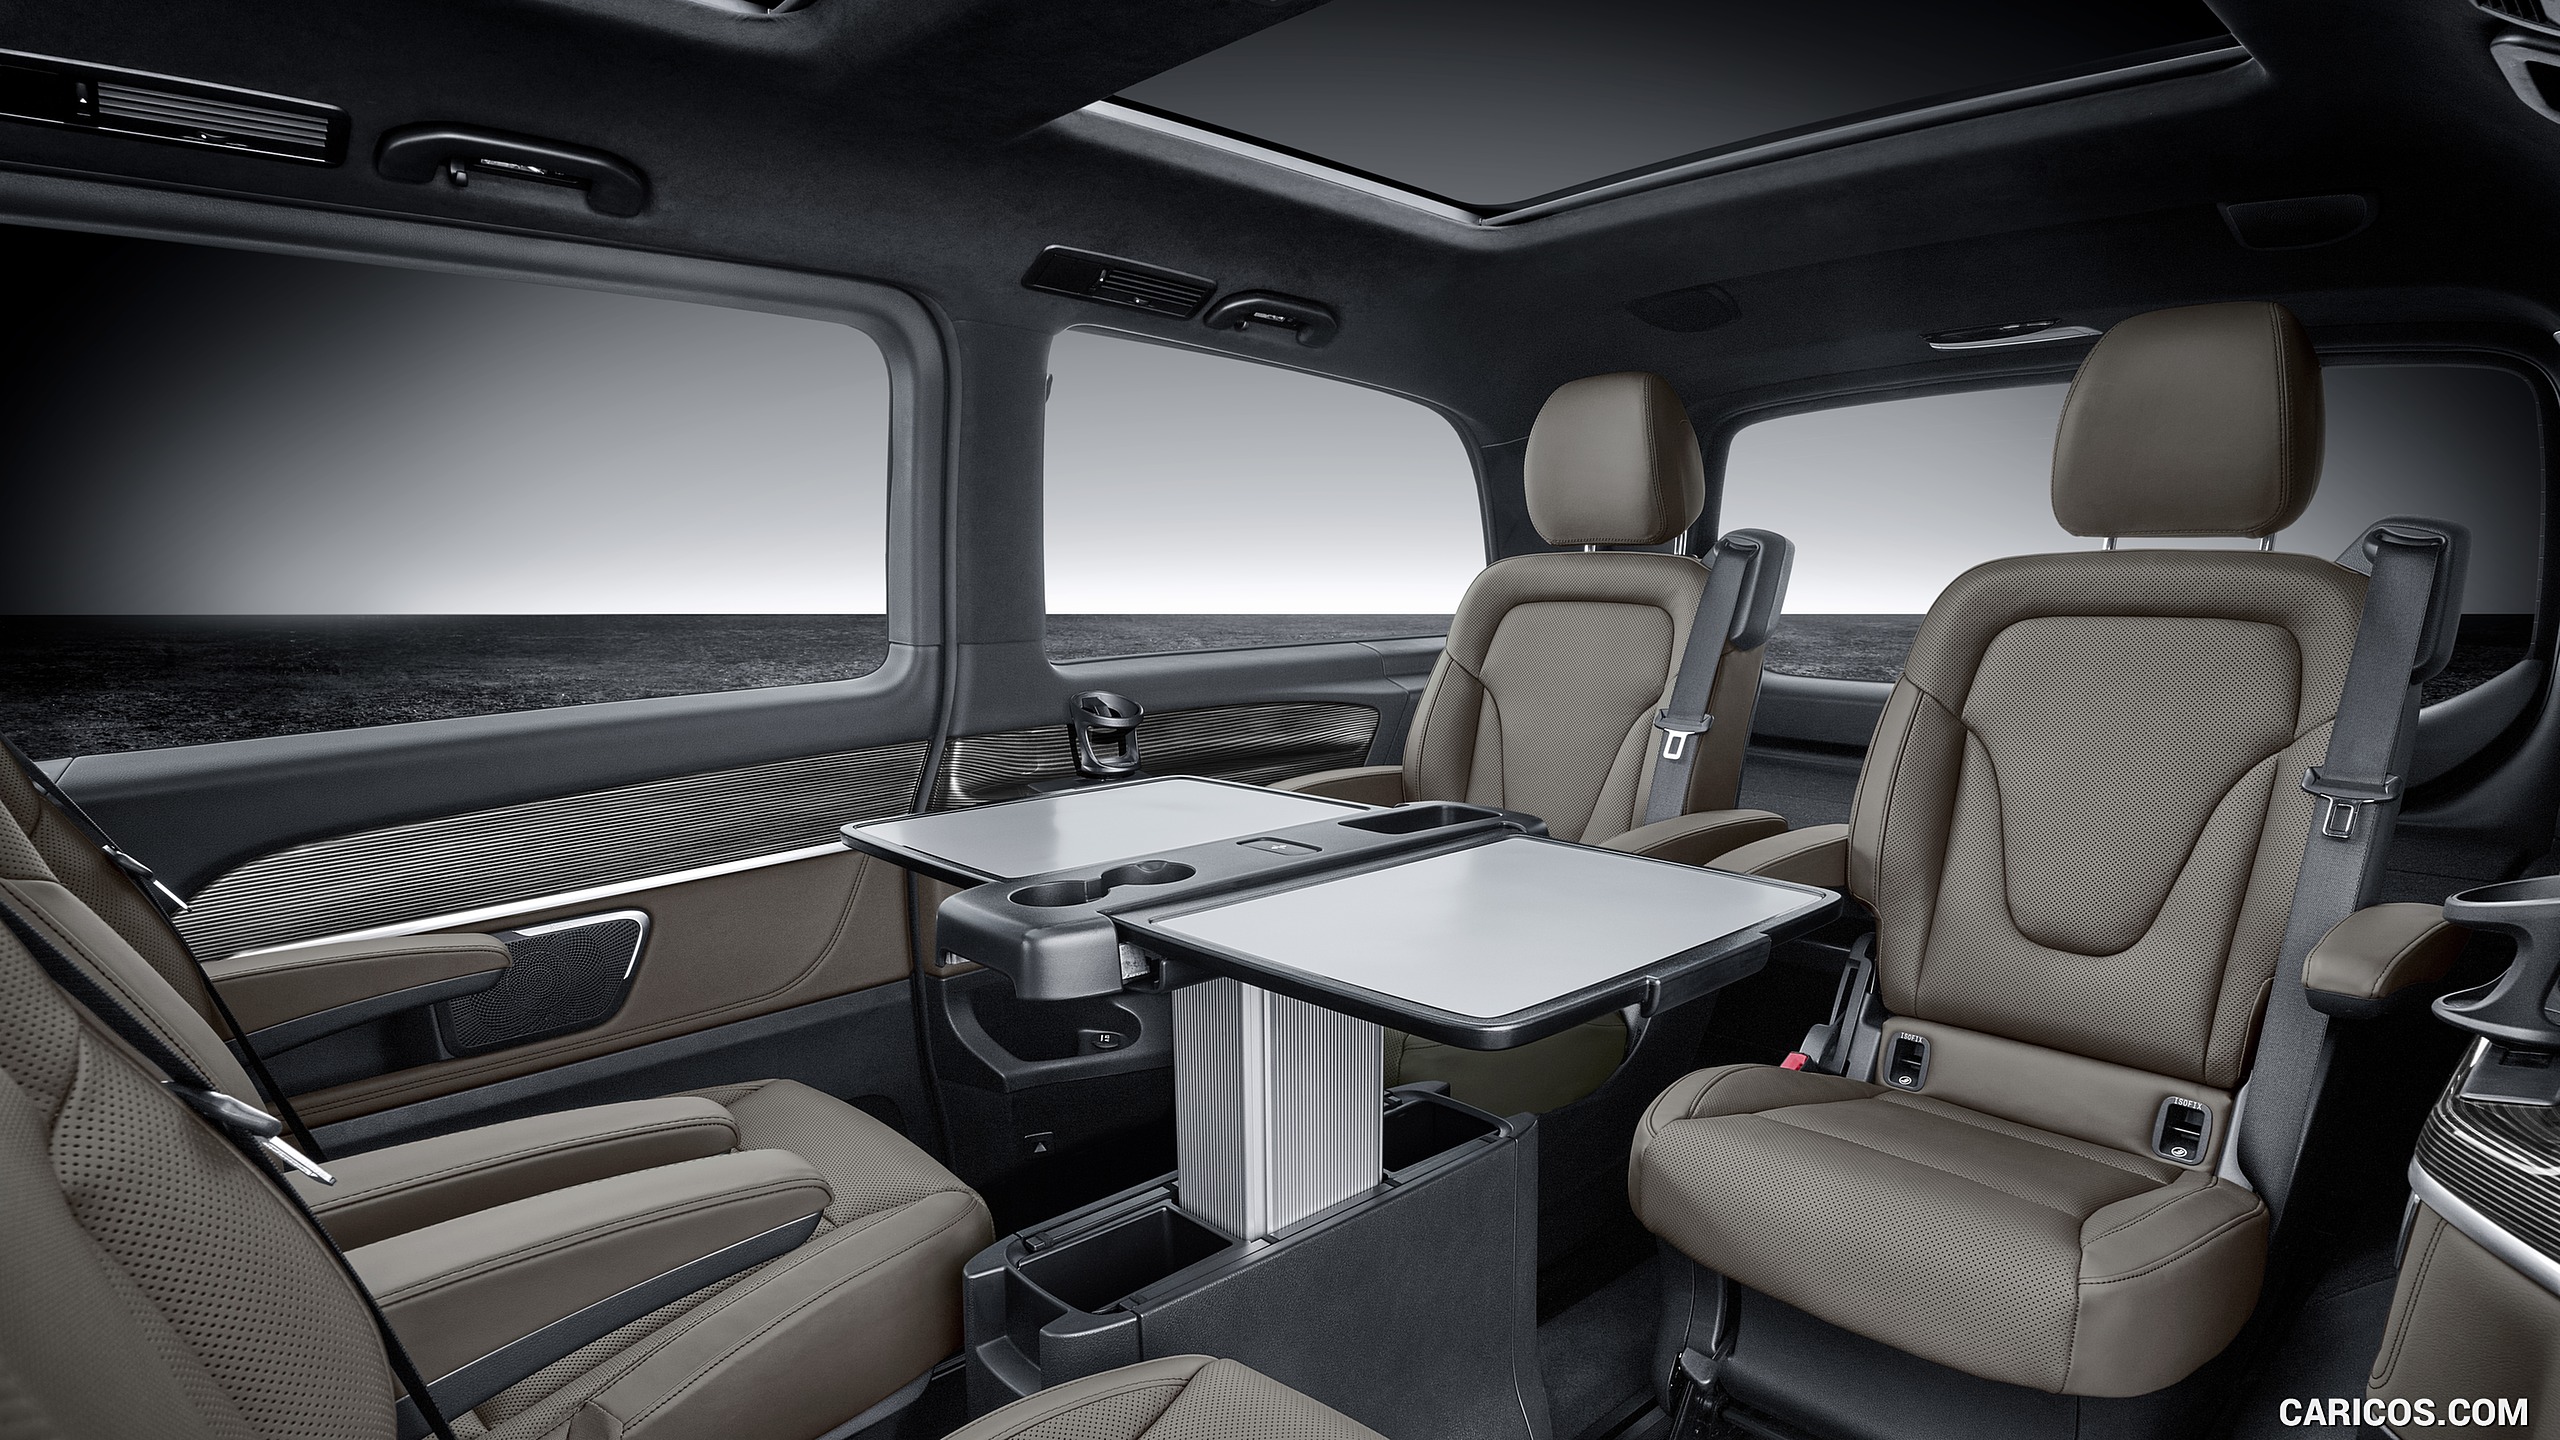 2019 Mercedes-Benz V-Class EXCLUSIVE Line - Interior, Seats, #74 of 216